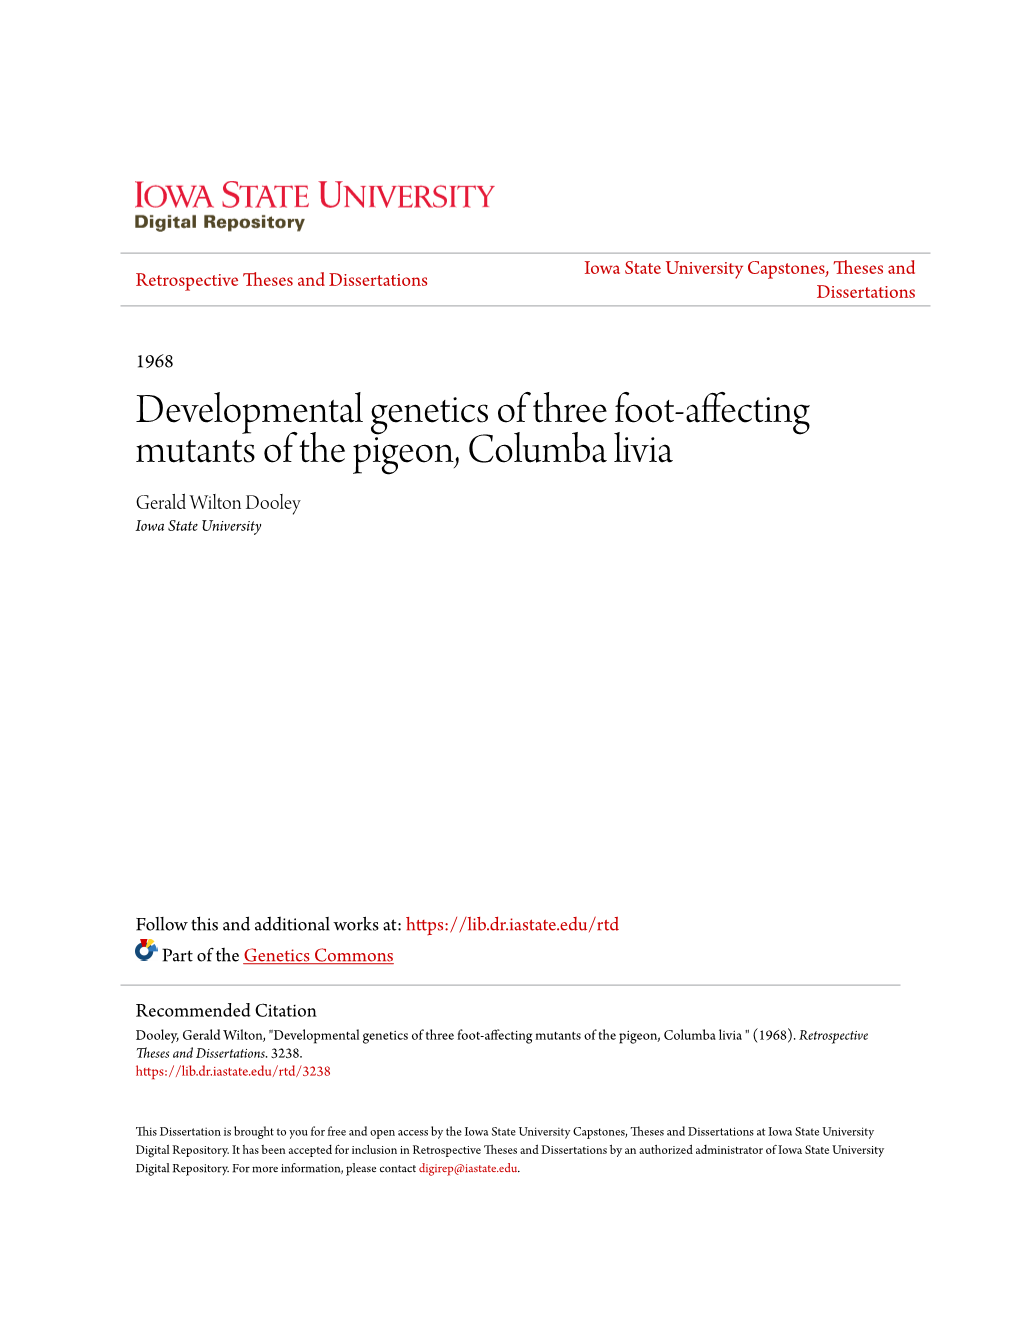 Developmental Genetics of Three Foot-Affecting Mutants of the Pigeon, Columba Livia Gerald Wilton Dooley Iowa State University